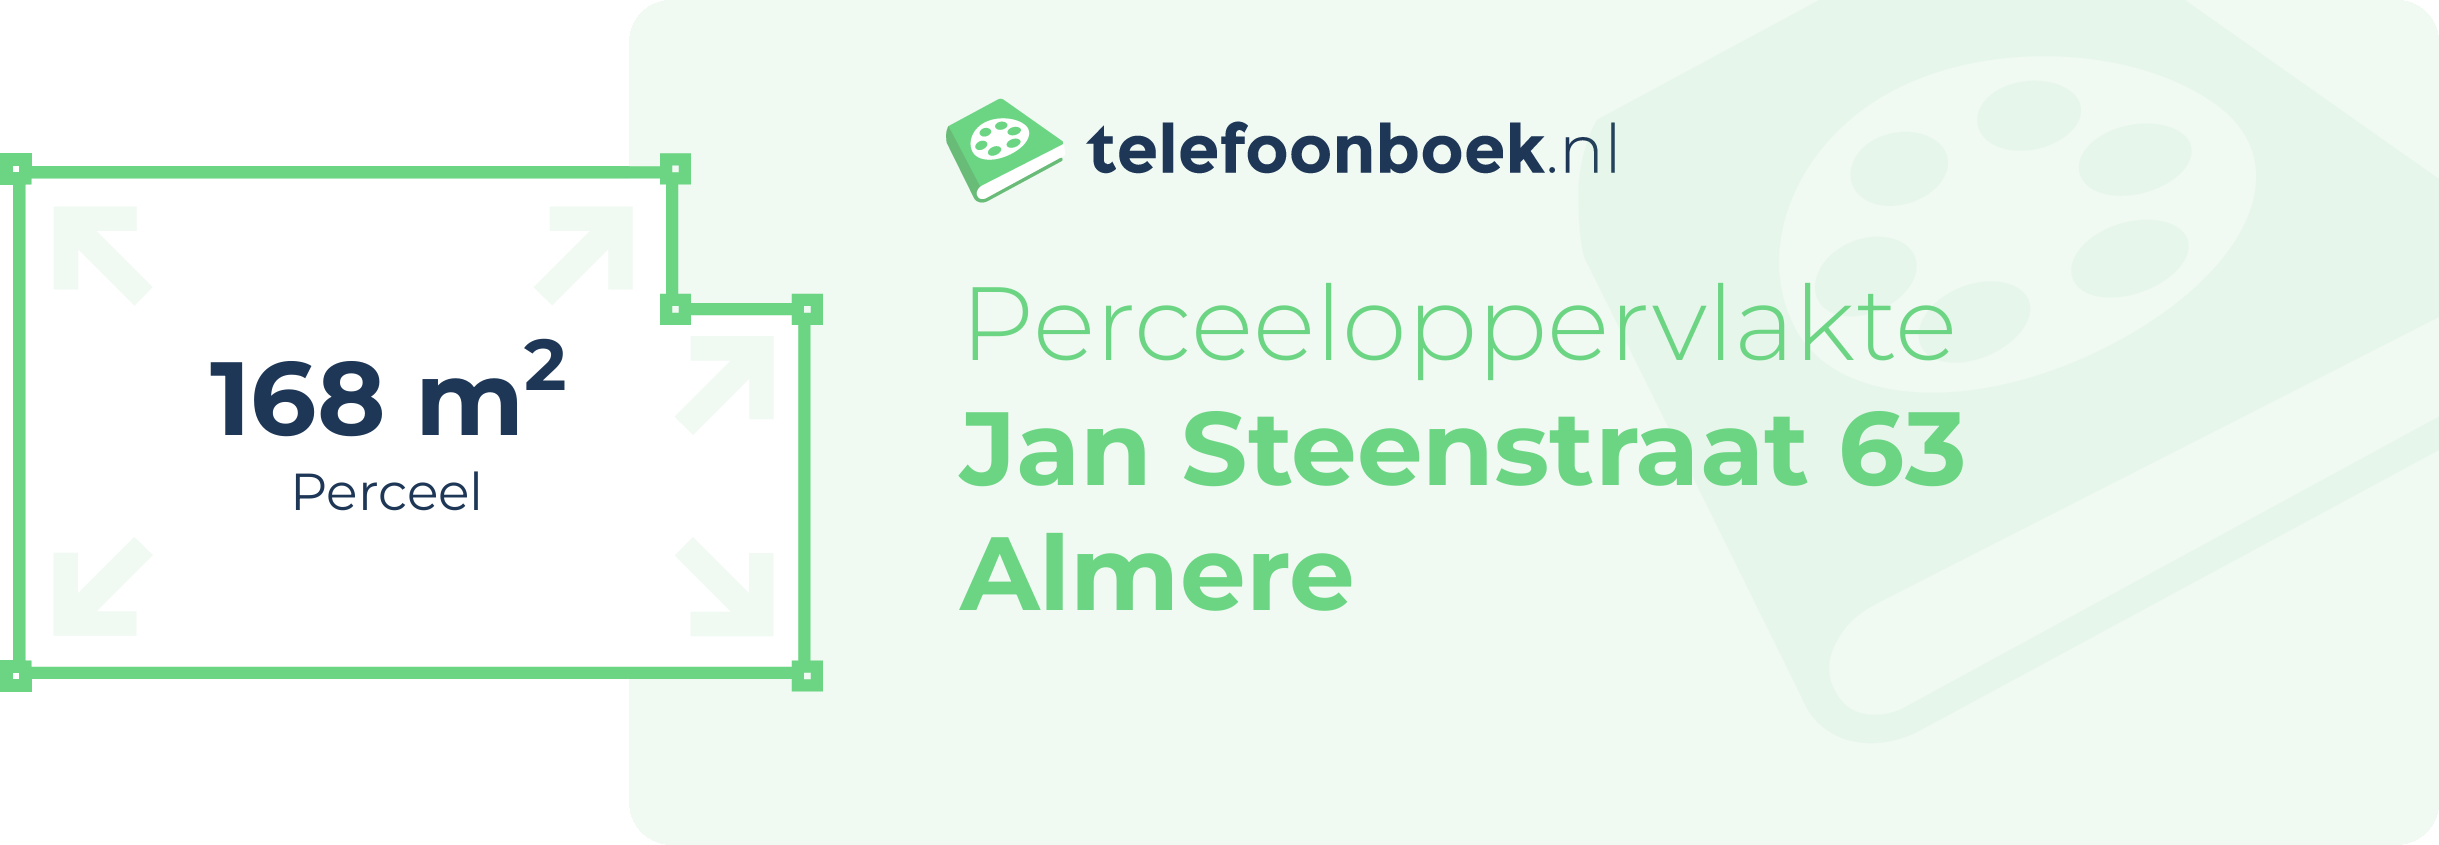 Perceeloppervlakte Jan Steenstraat 63 Almere